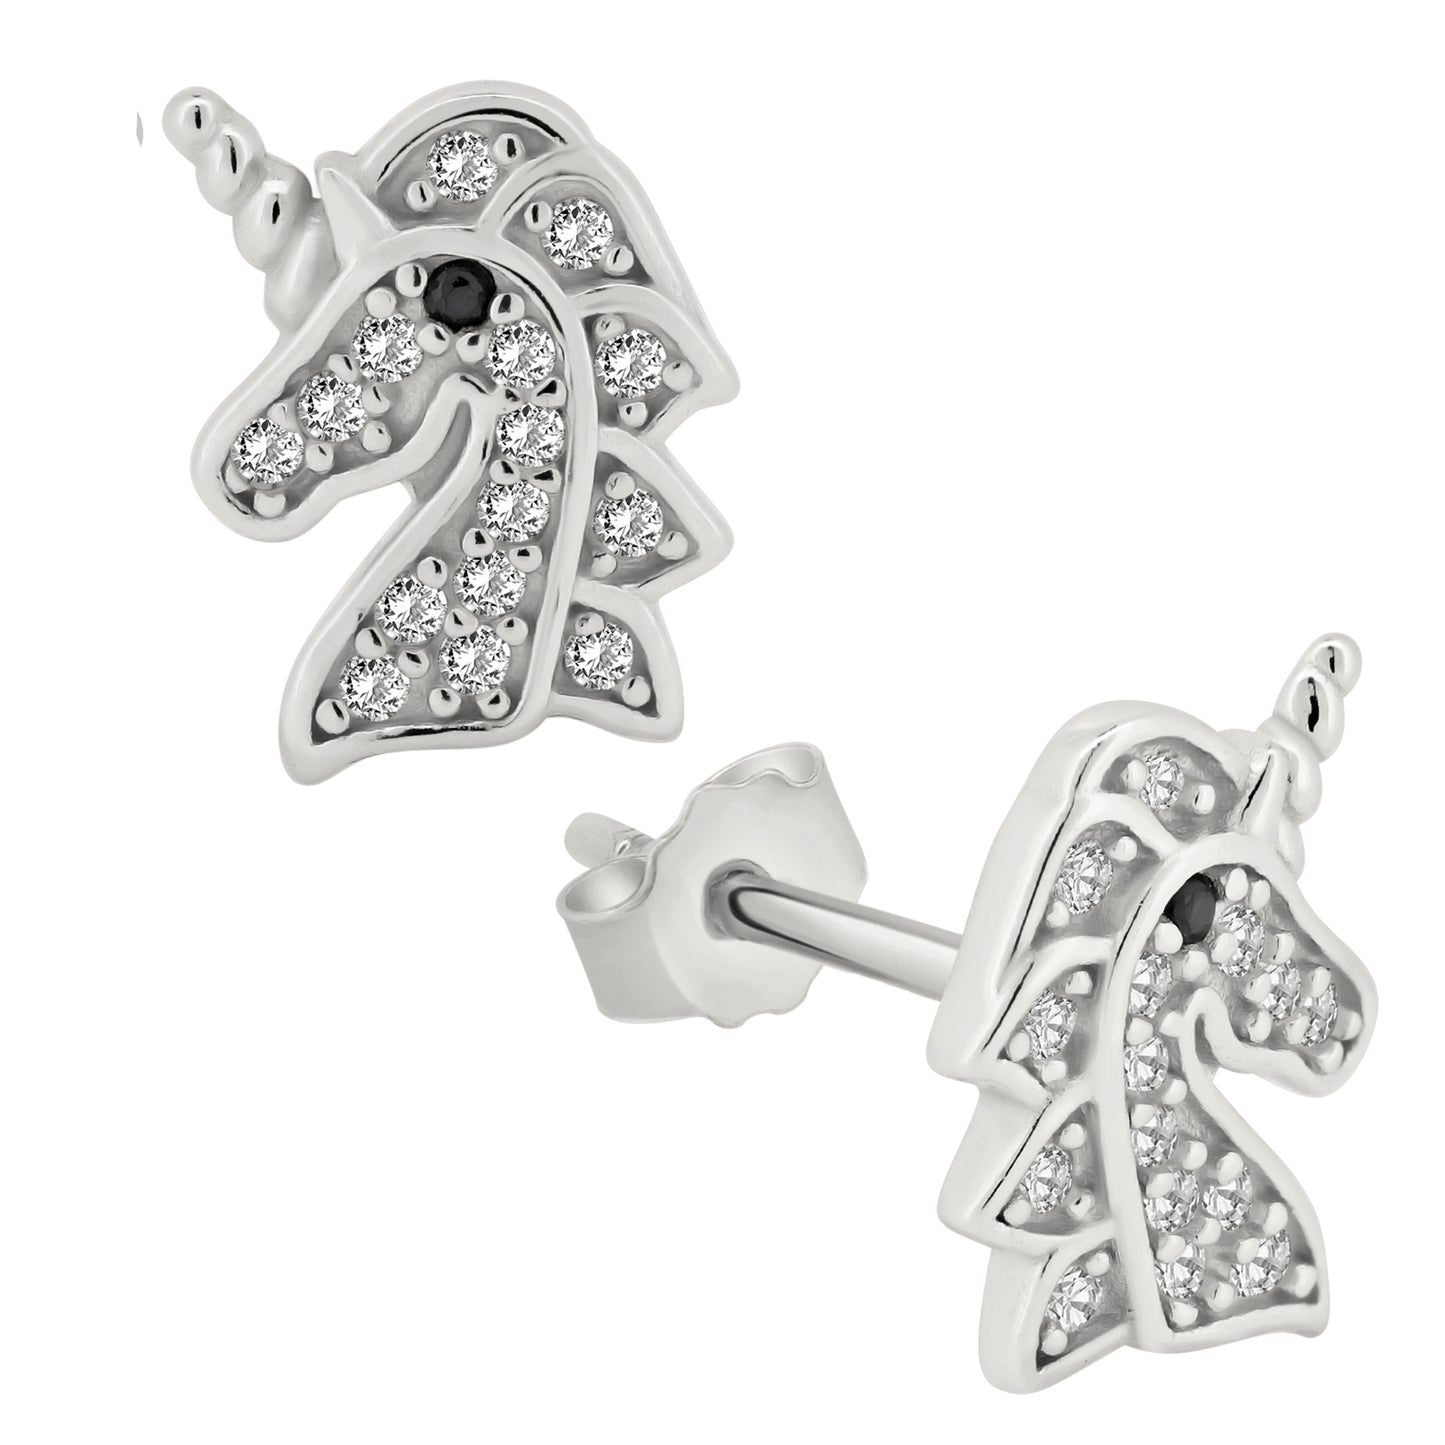 925 Sterling Silver Unicorn with Cubic Zirconia Design Earring Push Backing, Unicorn CZ Silver Earrings, Sterling Silver Push Backs, Magical Unicorn Jewelry, CZ Unicorn Studs, Sparkling Unicorn Accessories